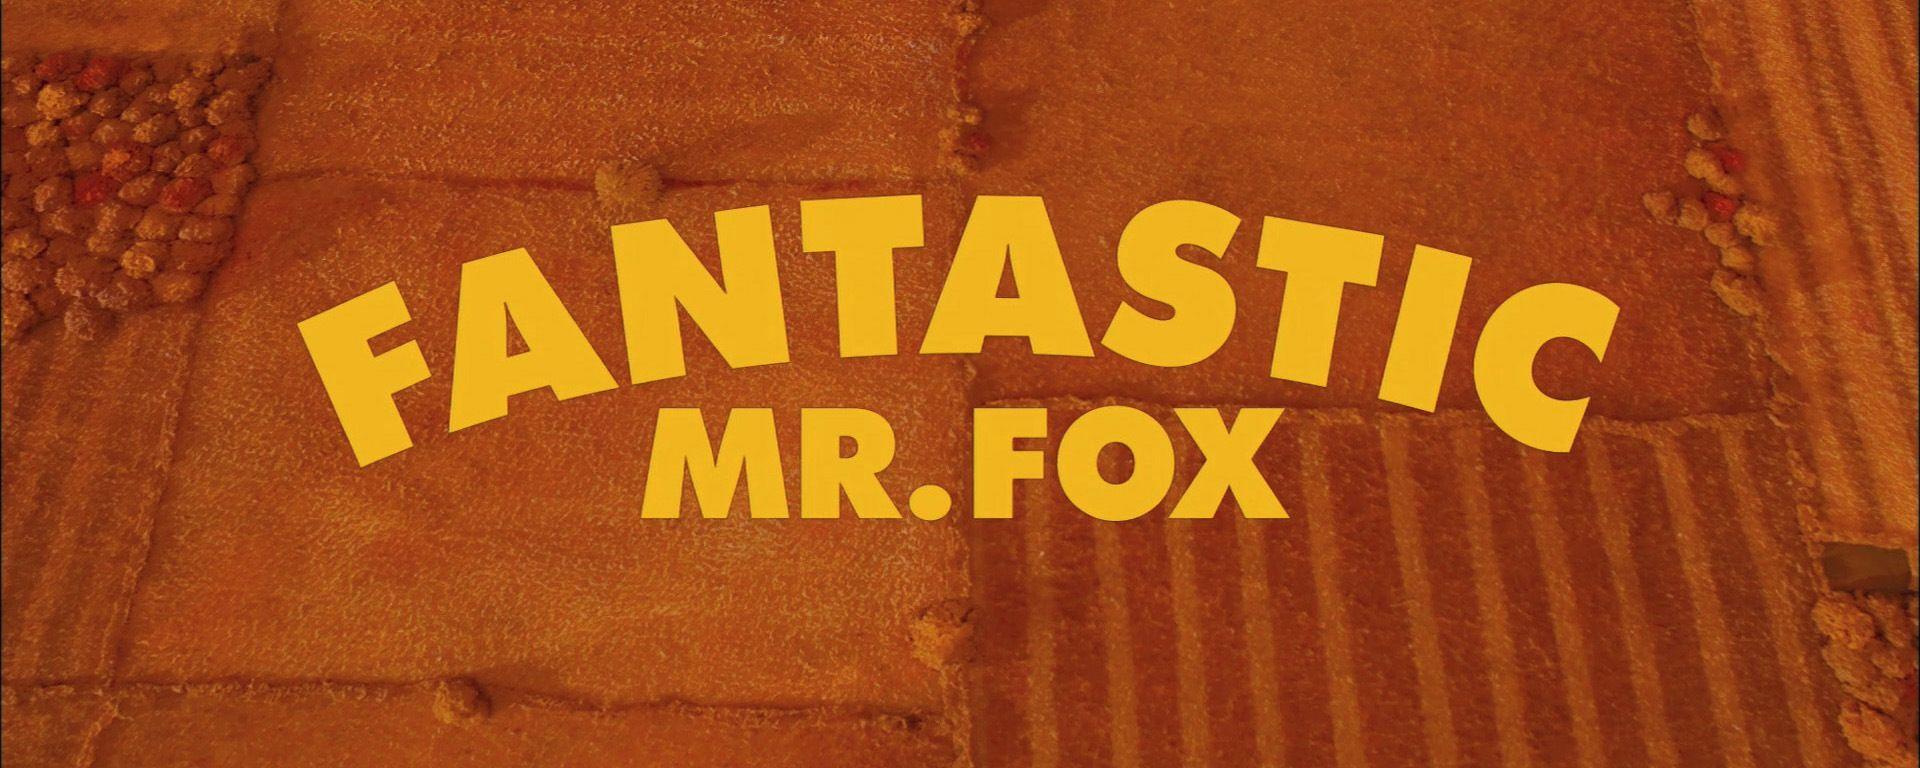 Fantastic Mr. Fox Logo - FANTASTIC MR. FOX